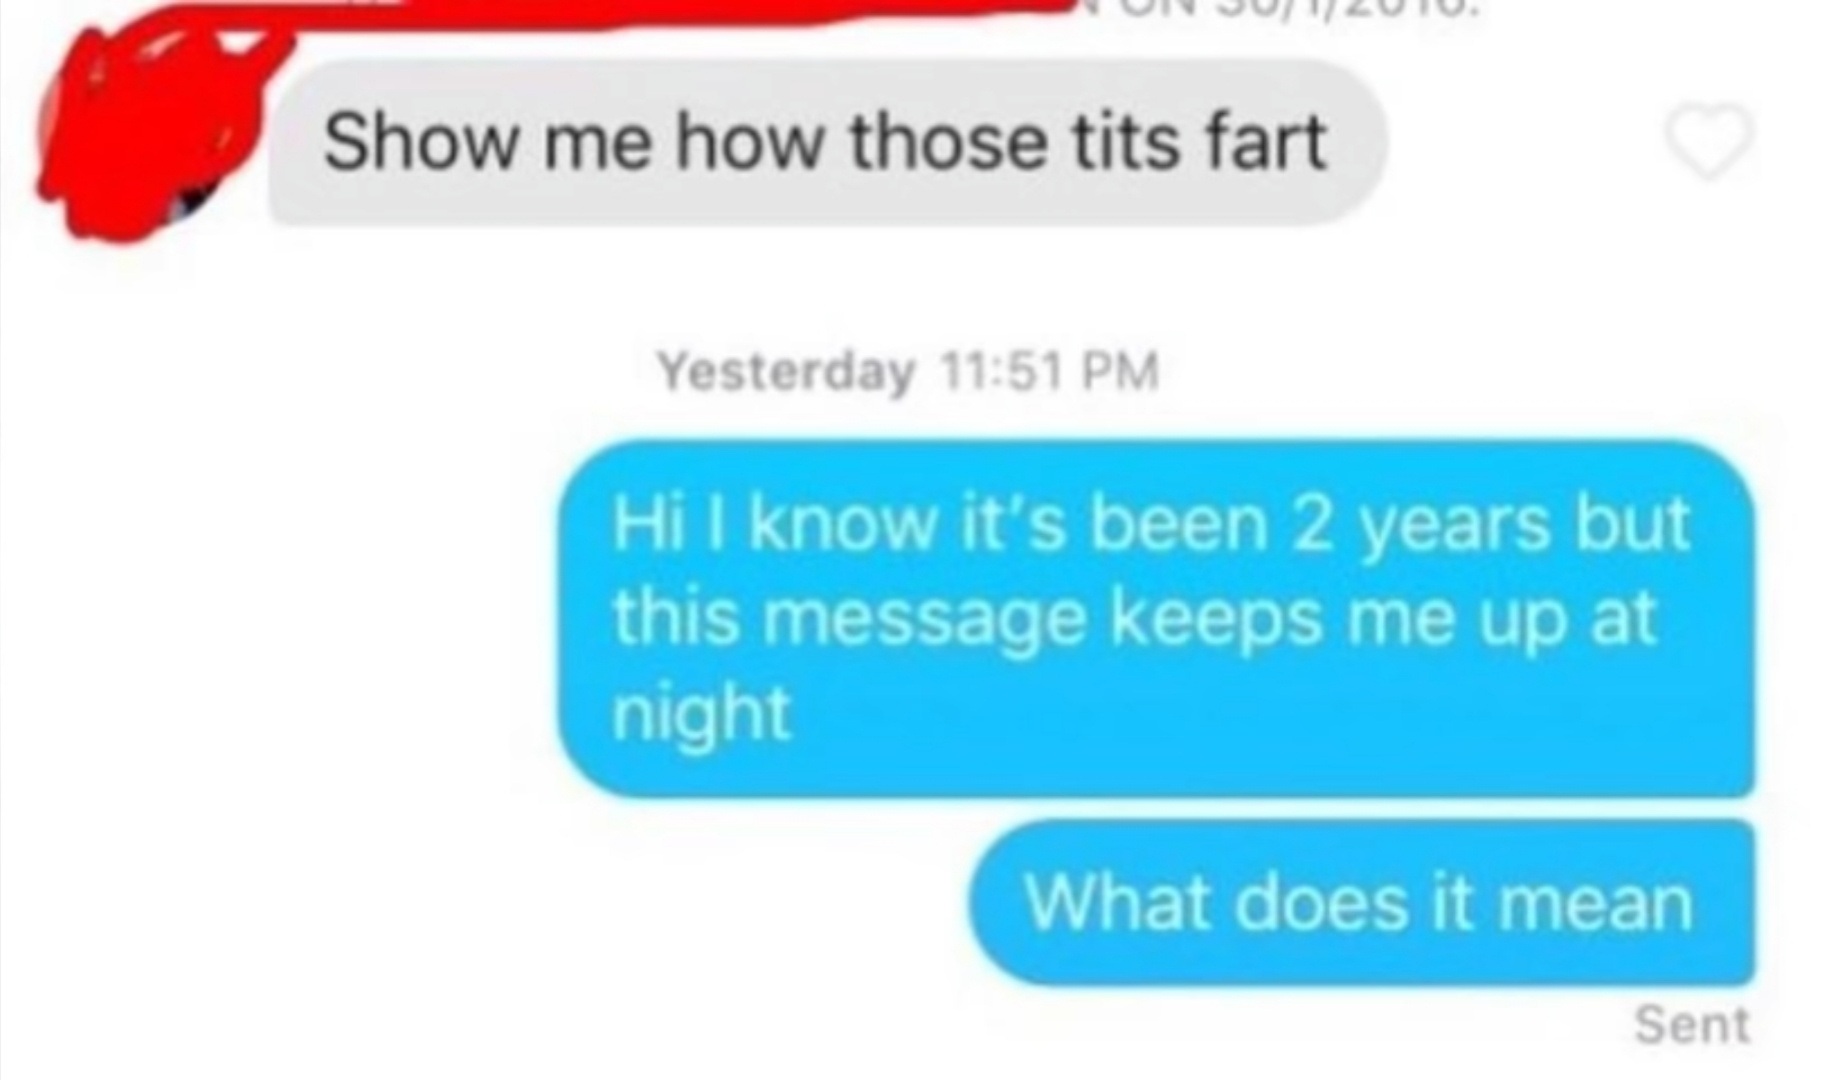 Show me.how those big tits.fart